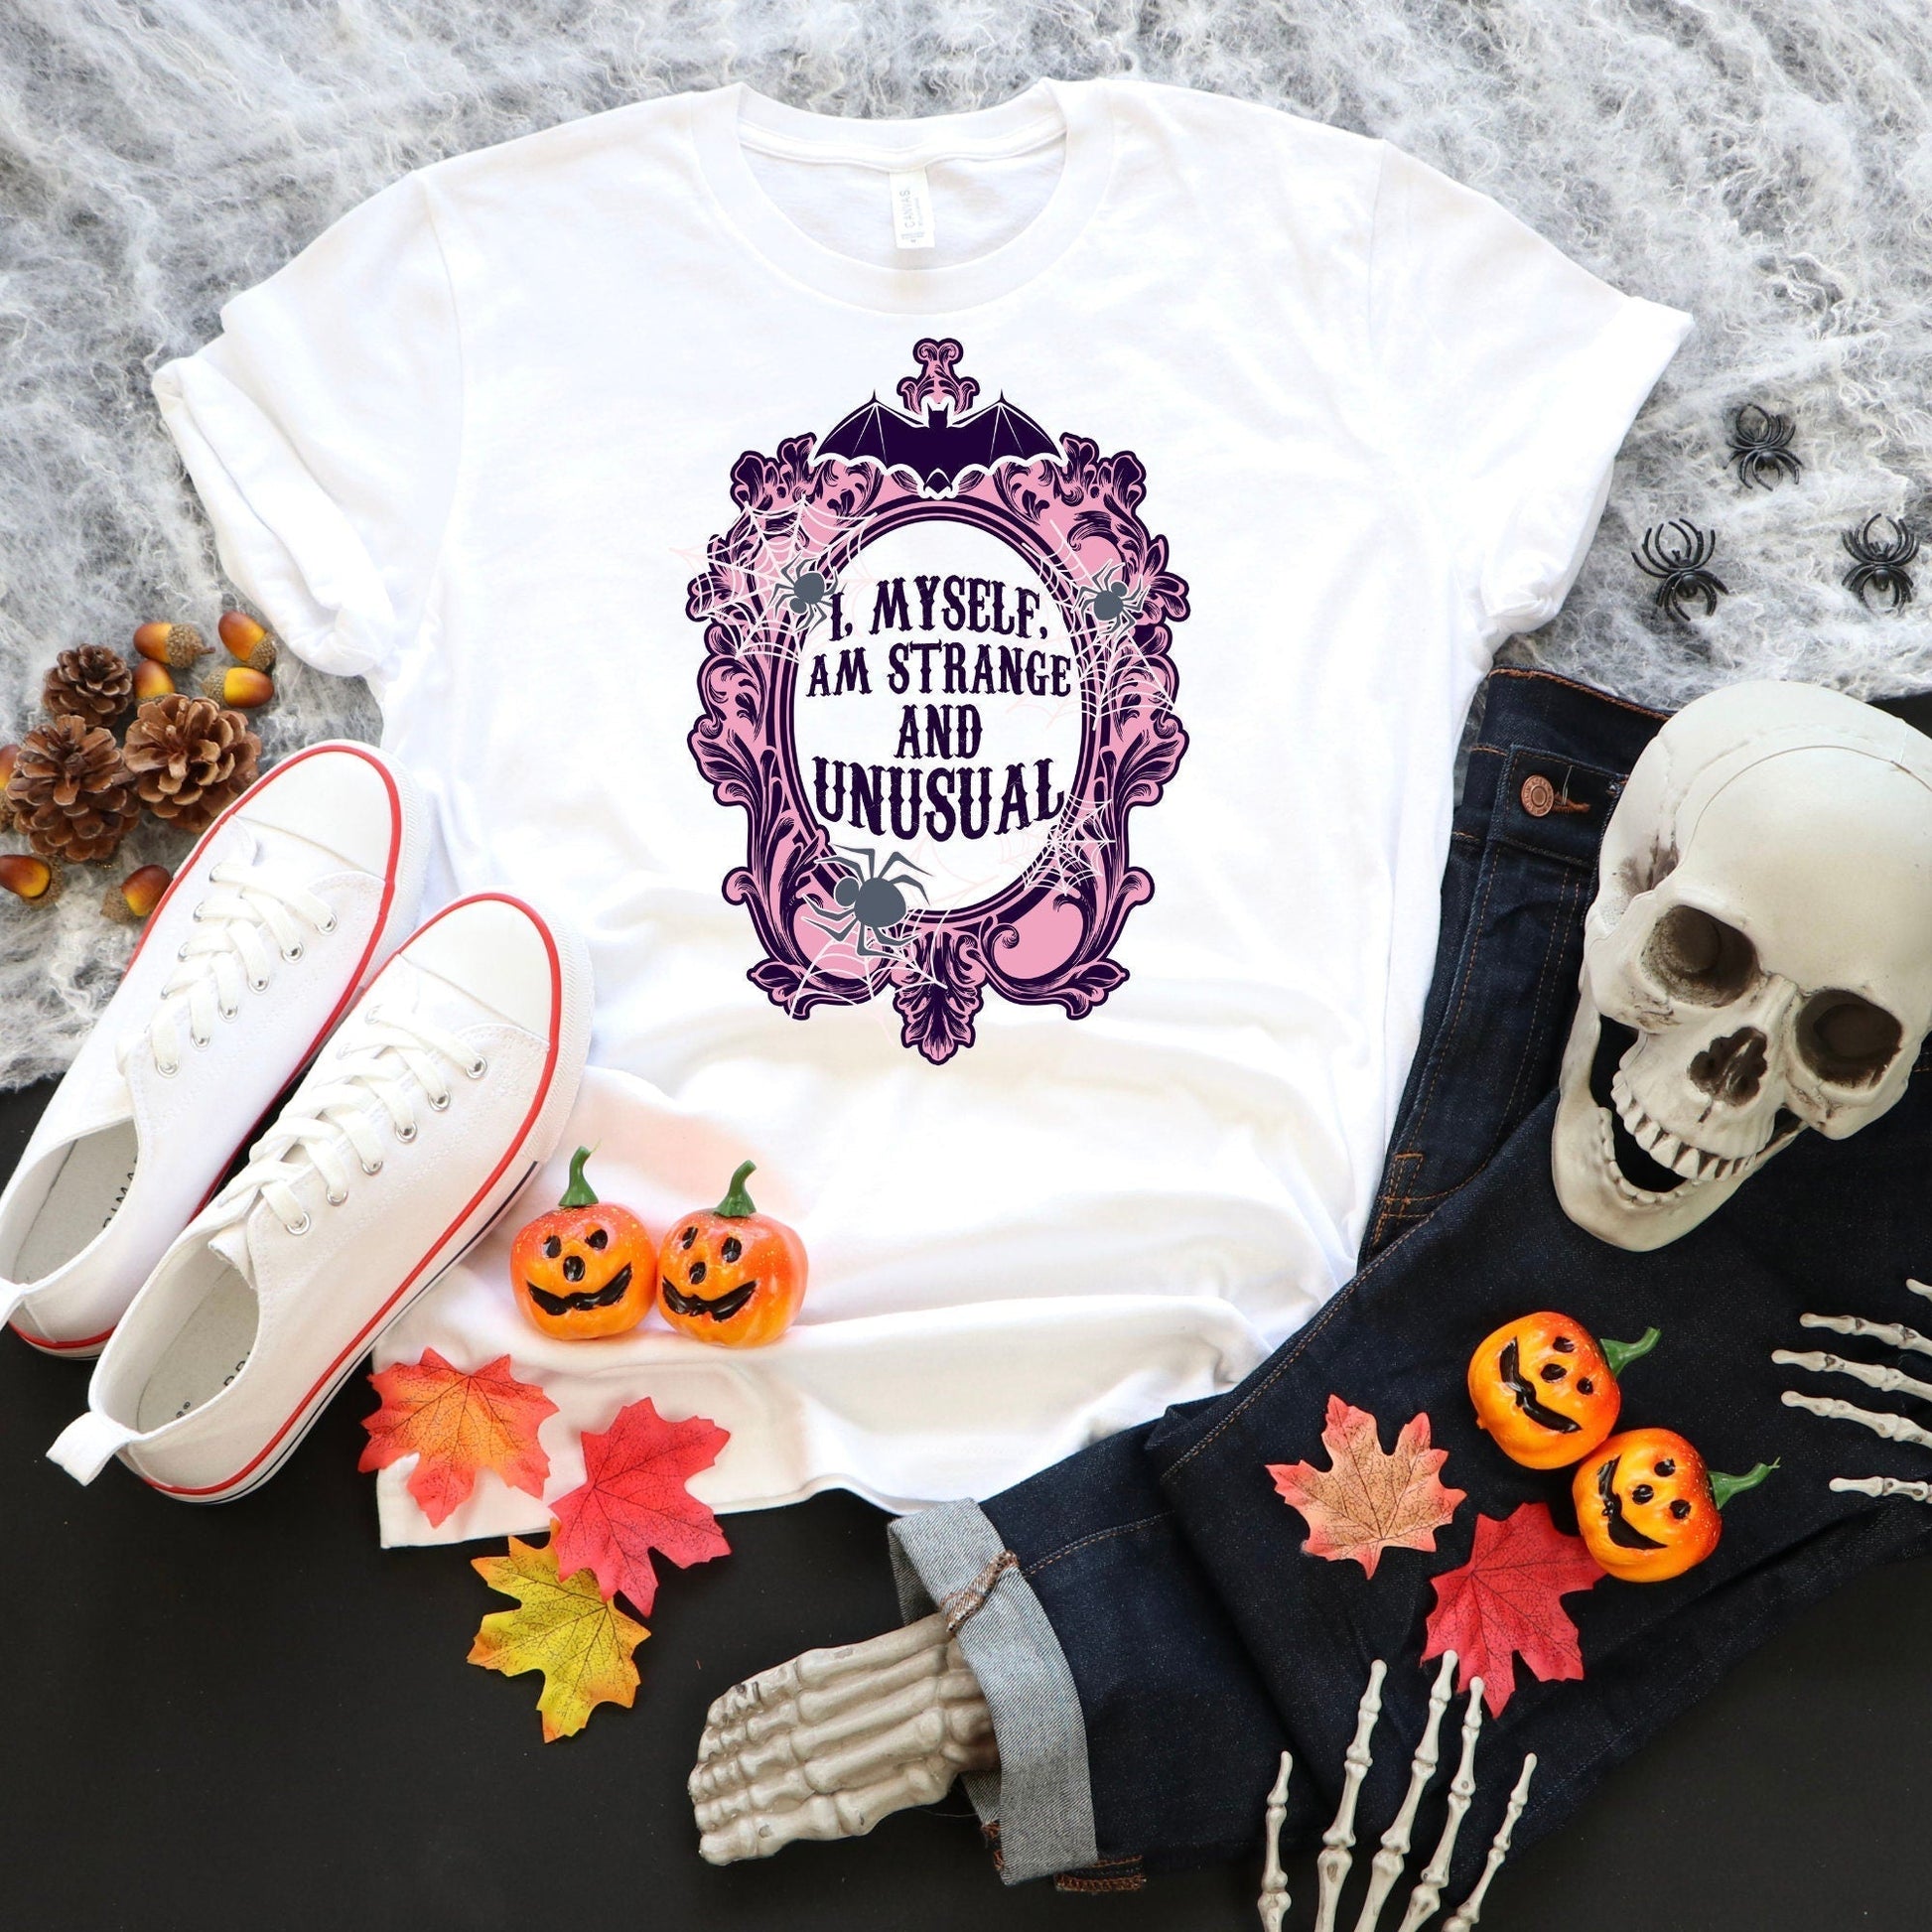 Gothic Shirt, Pastel Halloween Shirt, Witchy Vibes Sweatshirt, Skull Shirt, Pastel Goth Style Grunge Shirt, Aesthetic Clothing, Witch Tee